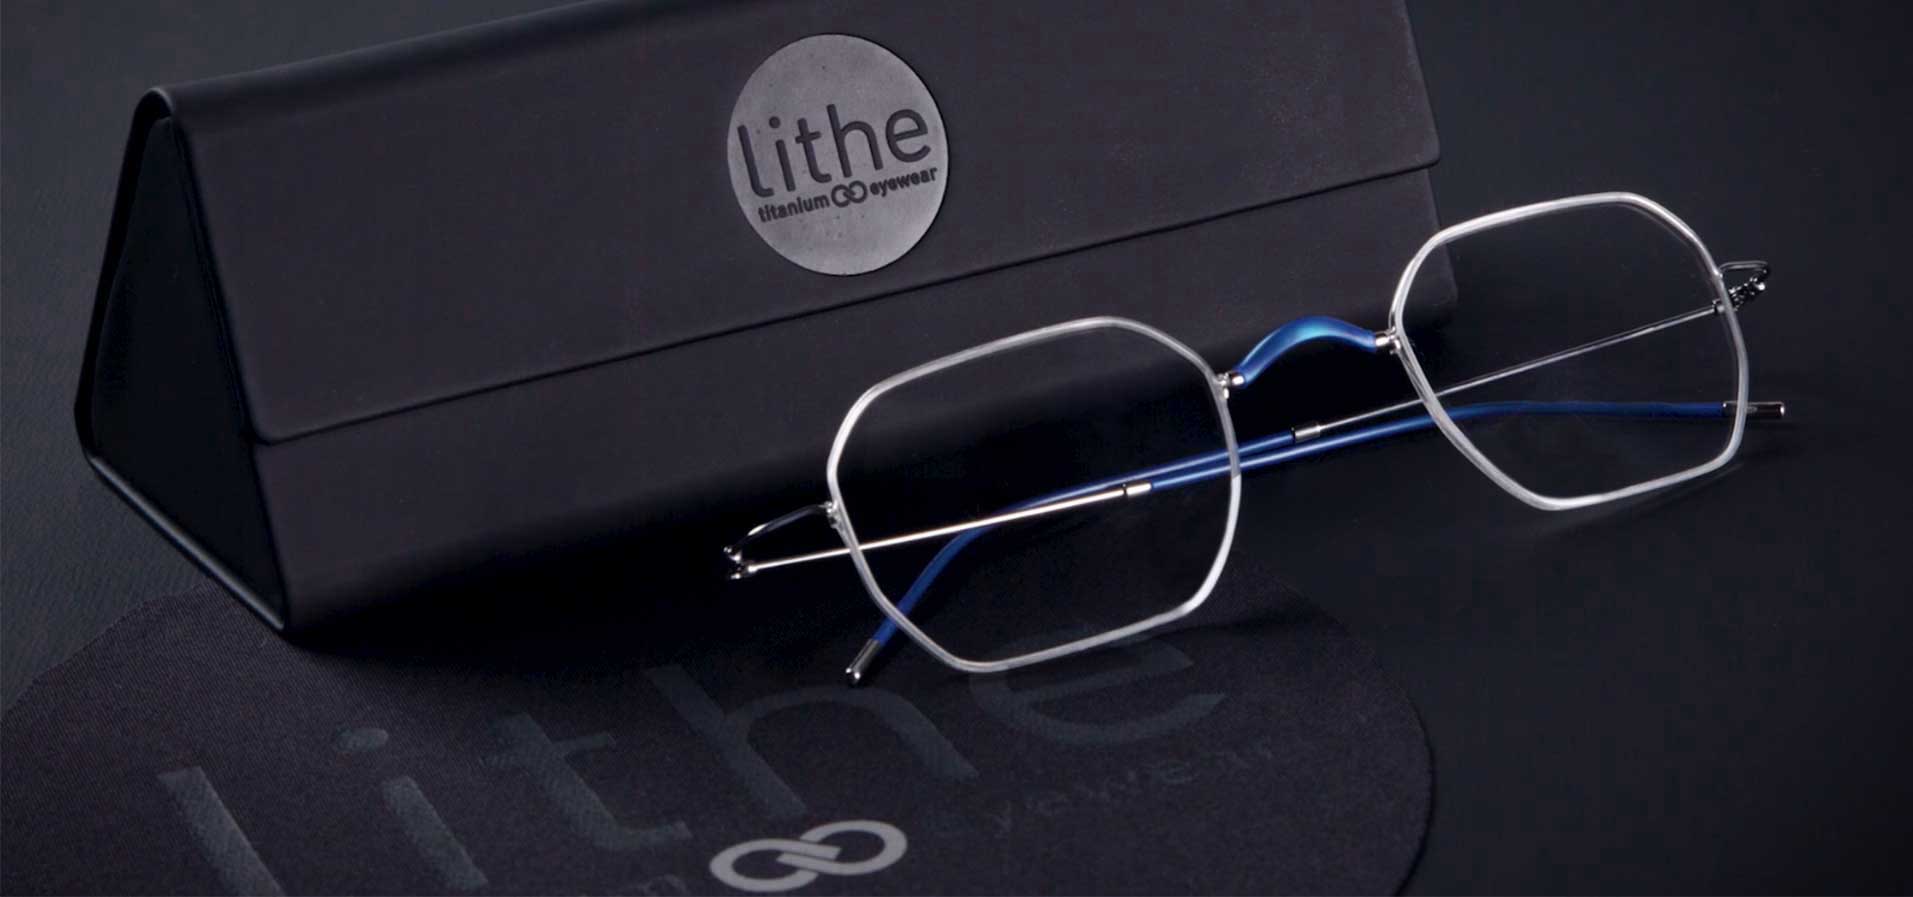 lithe-eyewear-glazing-ring-video